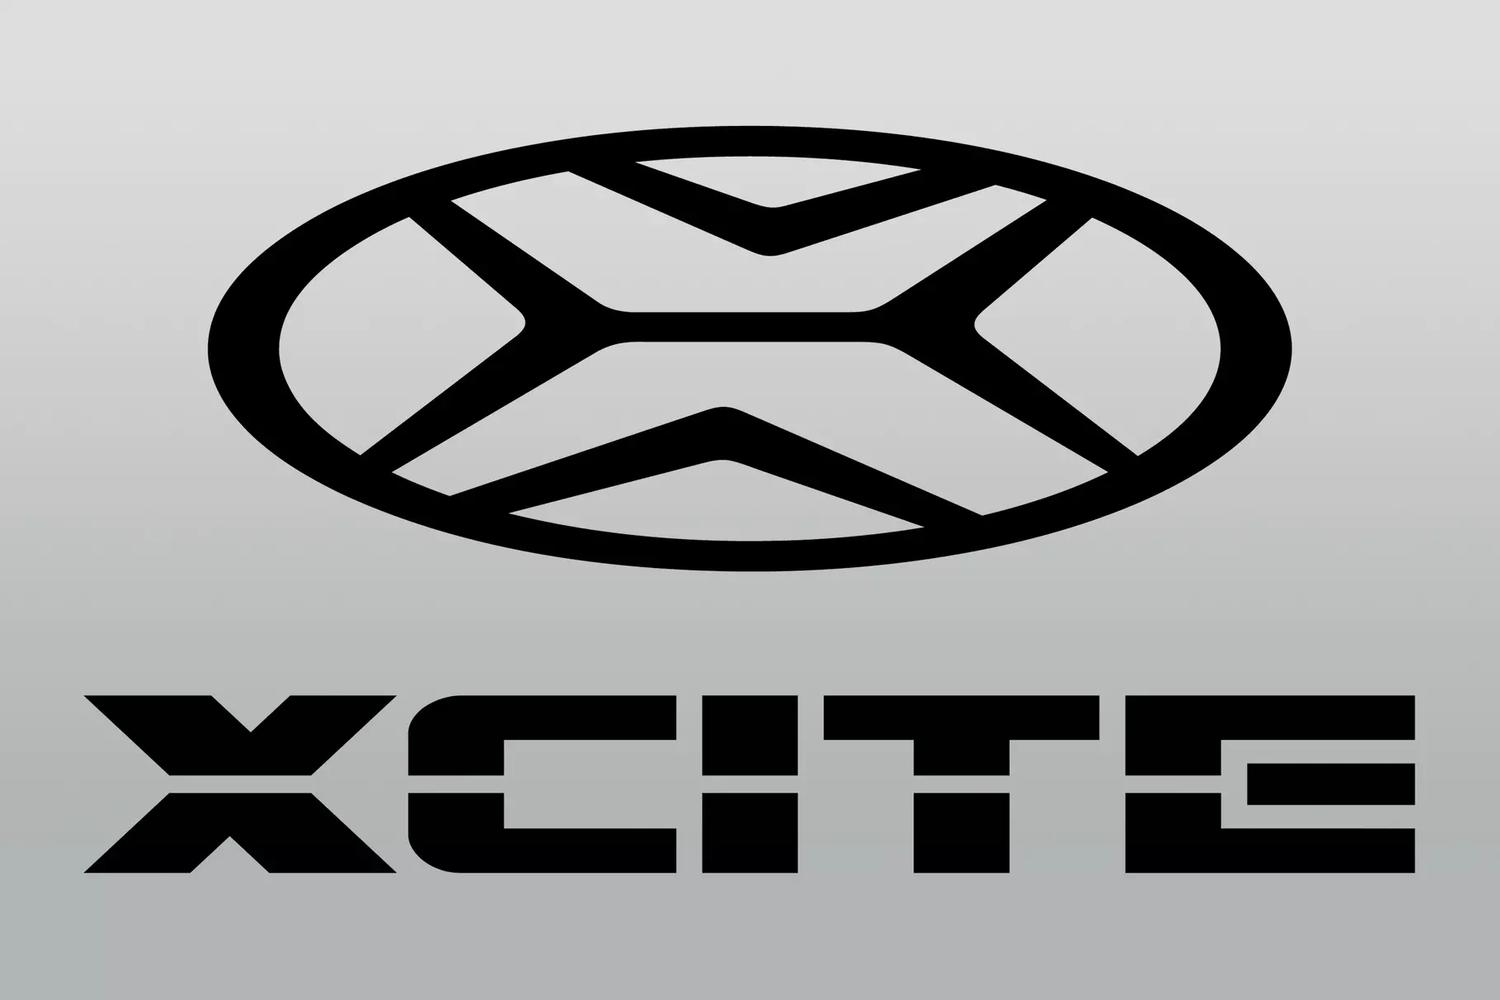         Xcite  Motor